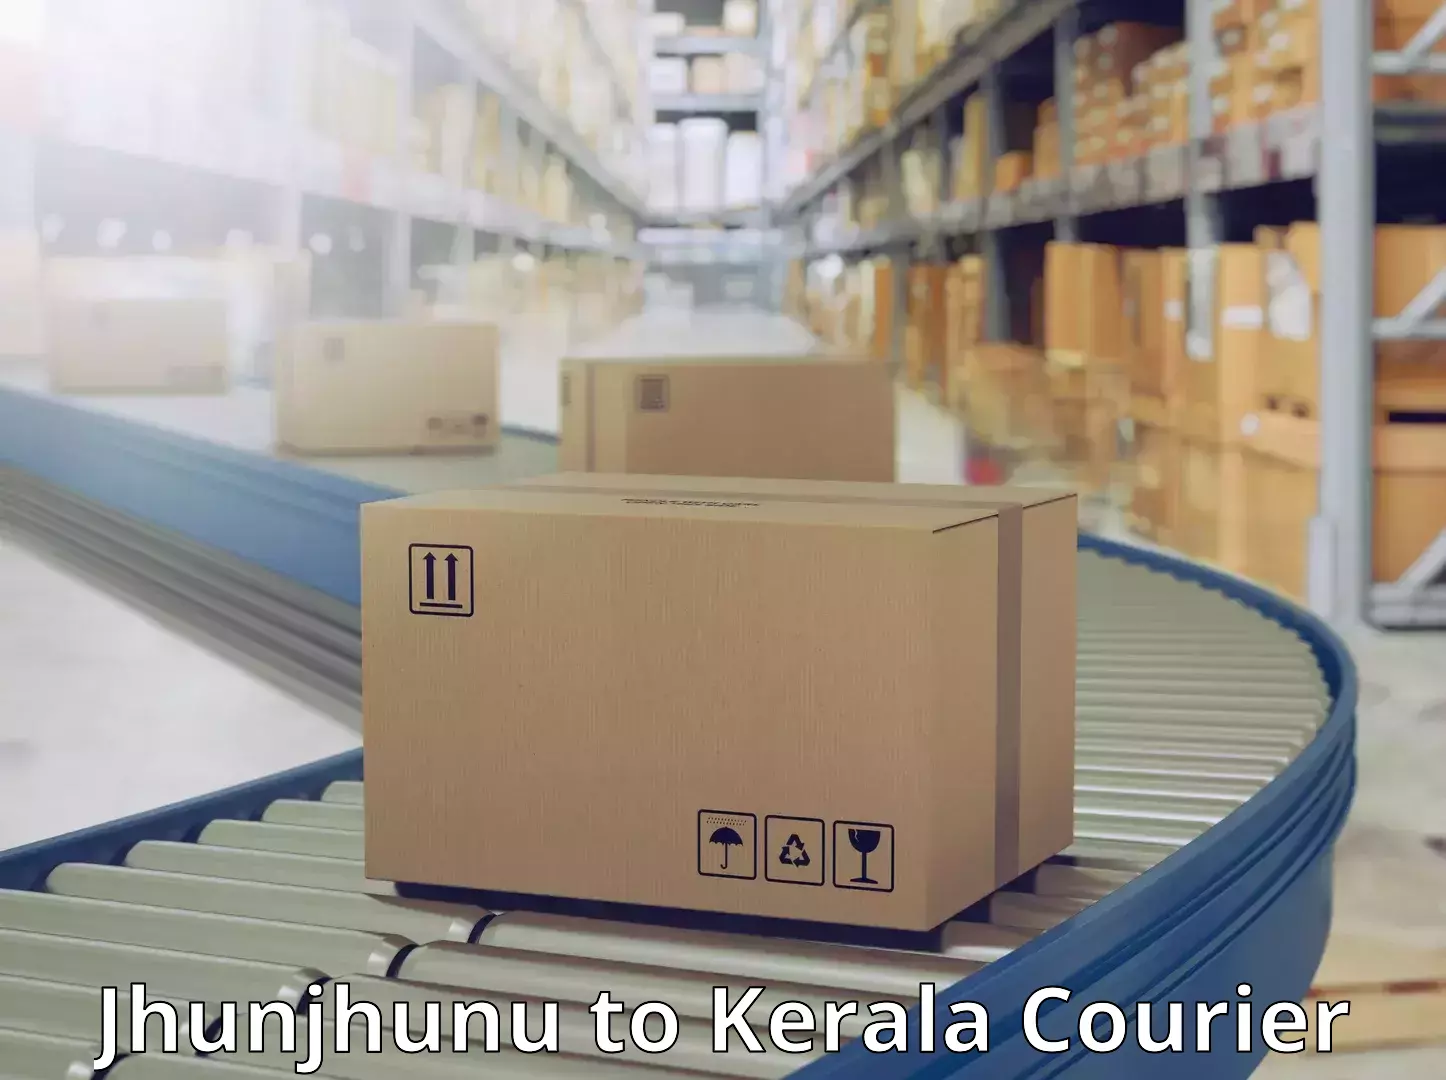 User-friendly delivery service Jhunjhunu to Kerala